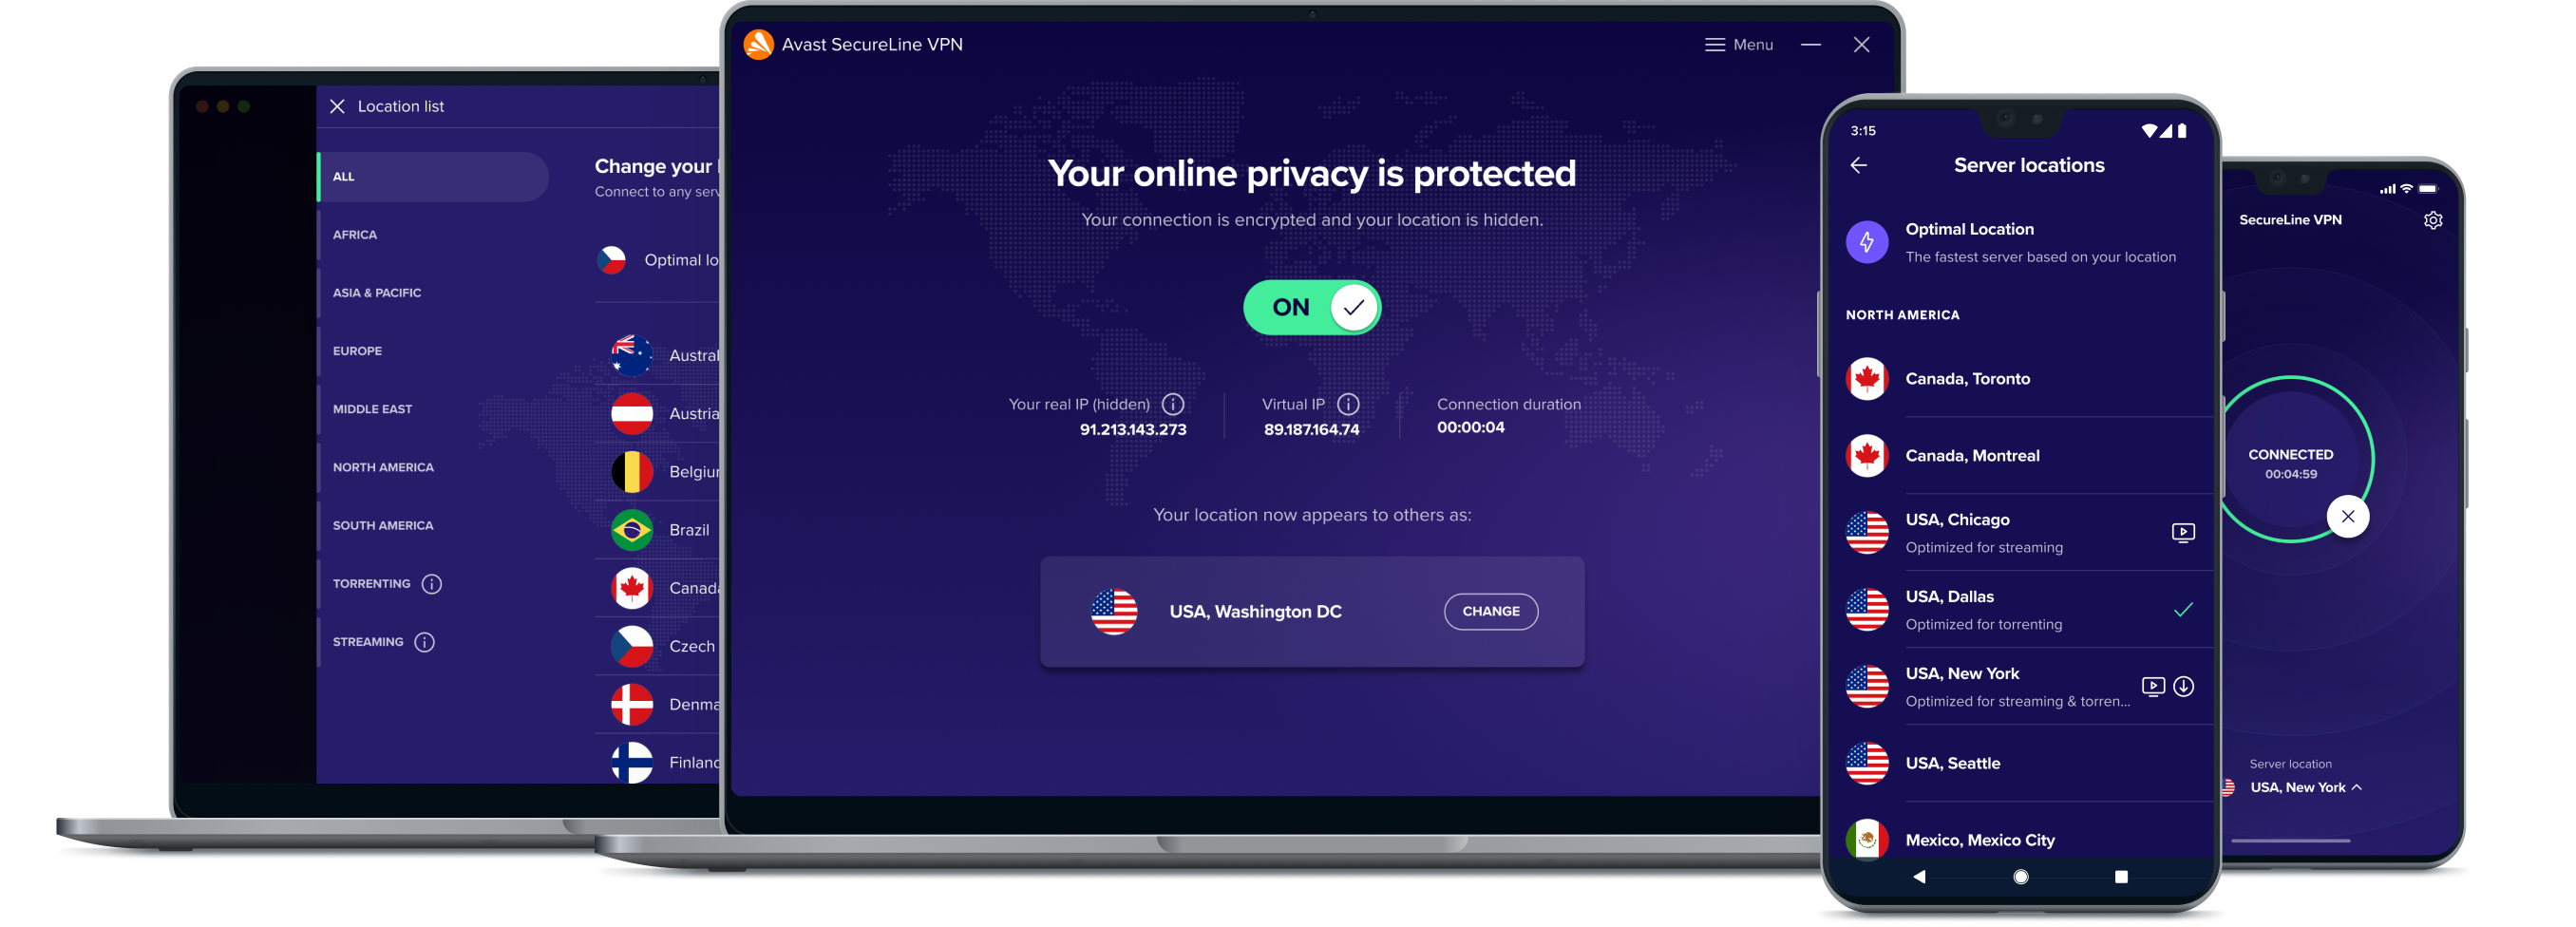 Is Avast security a good VPN?